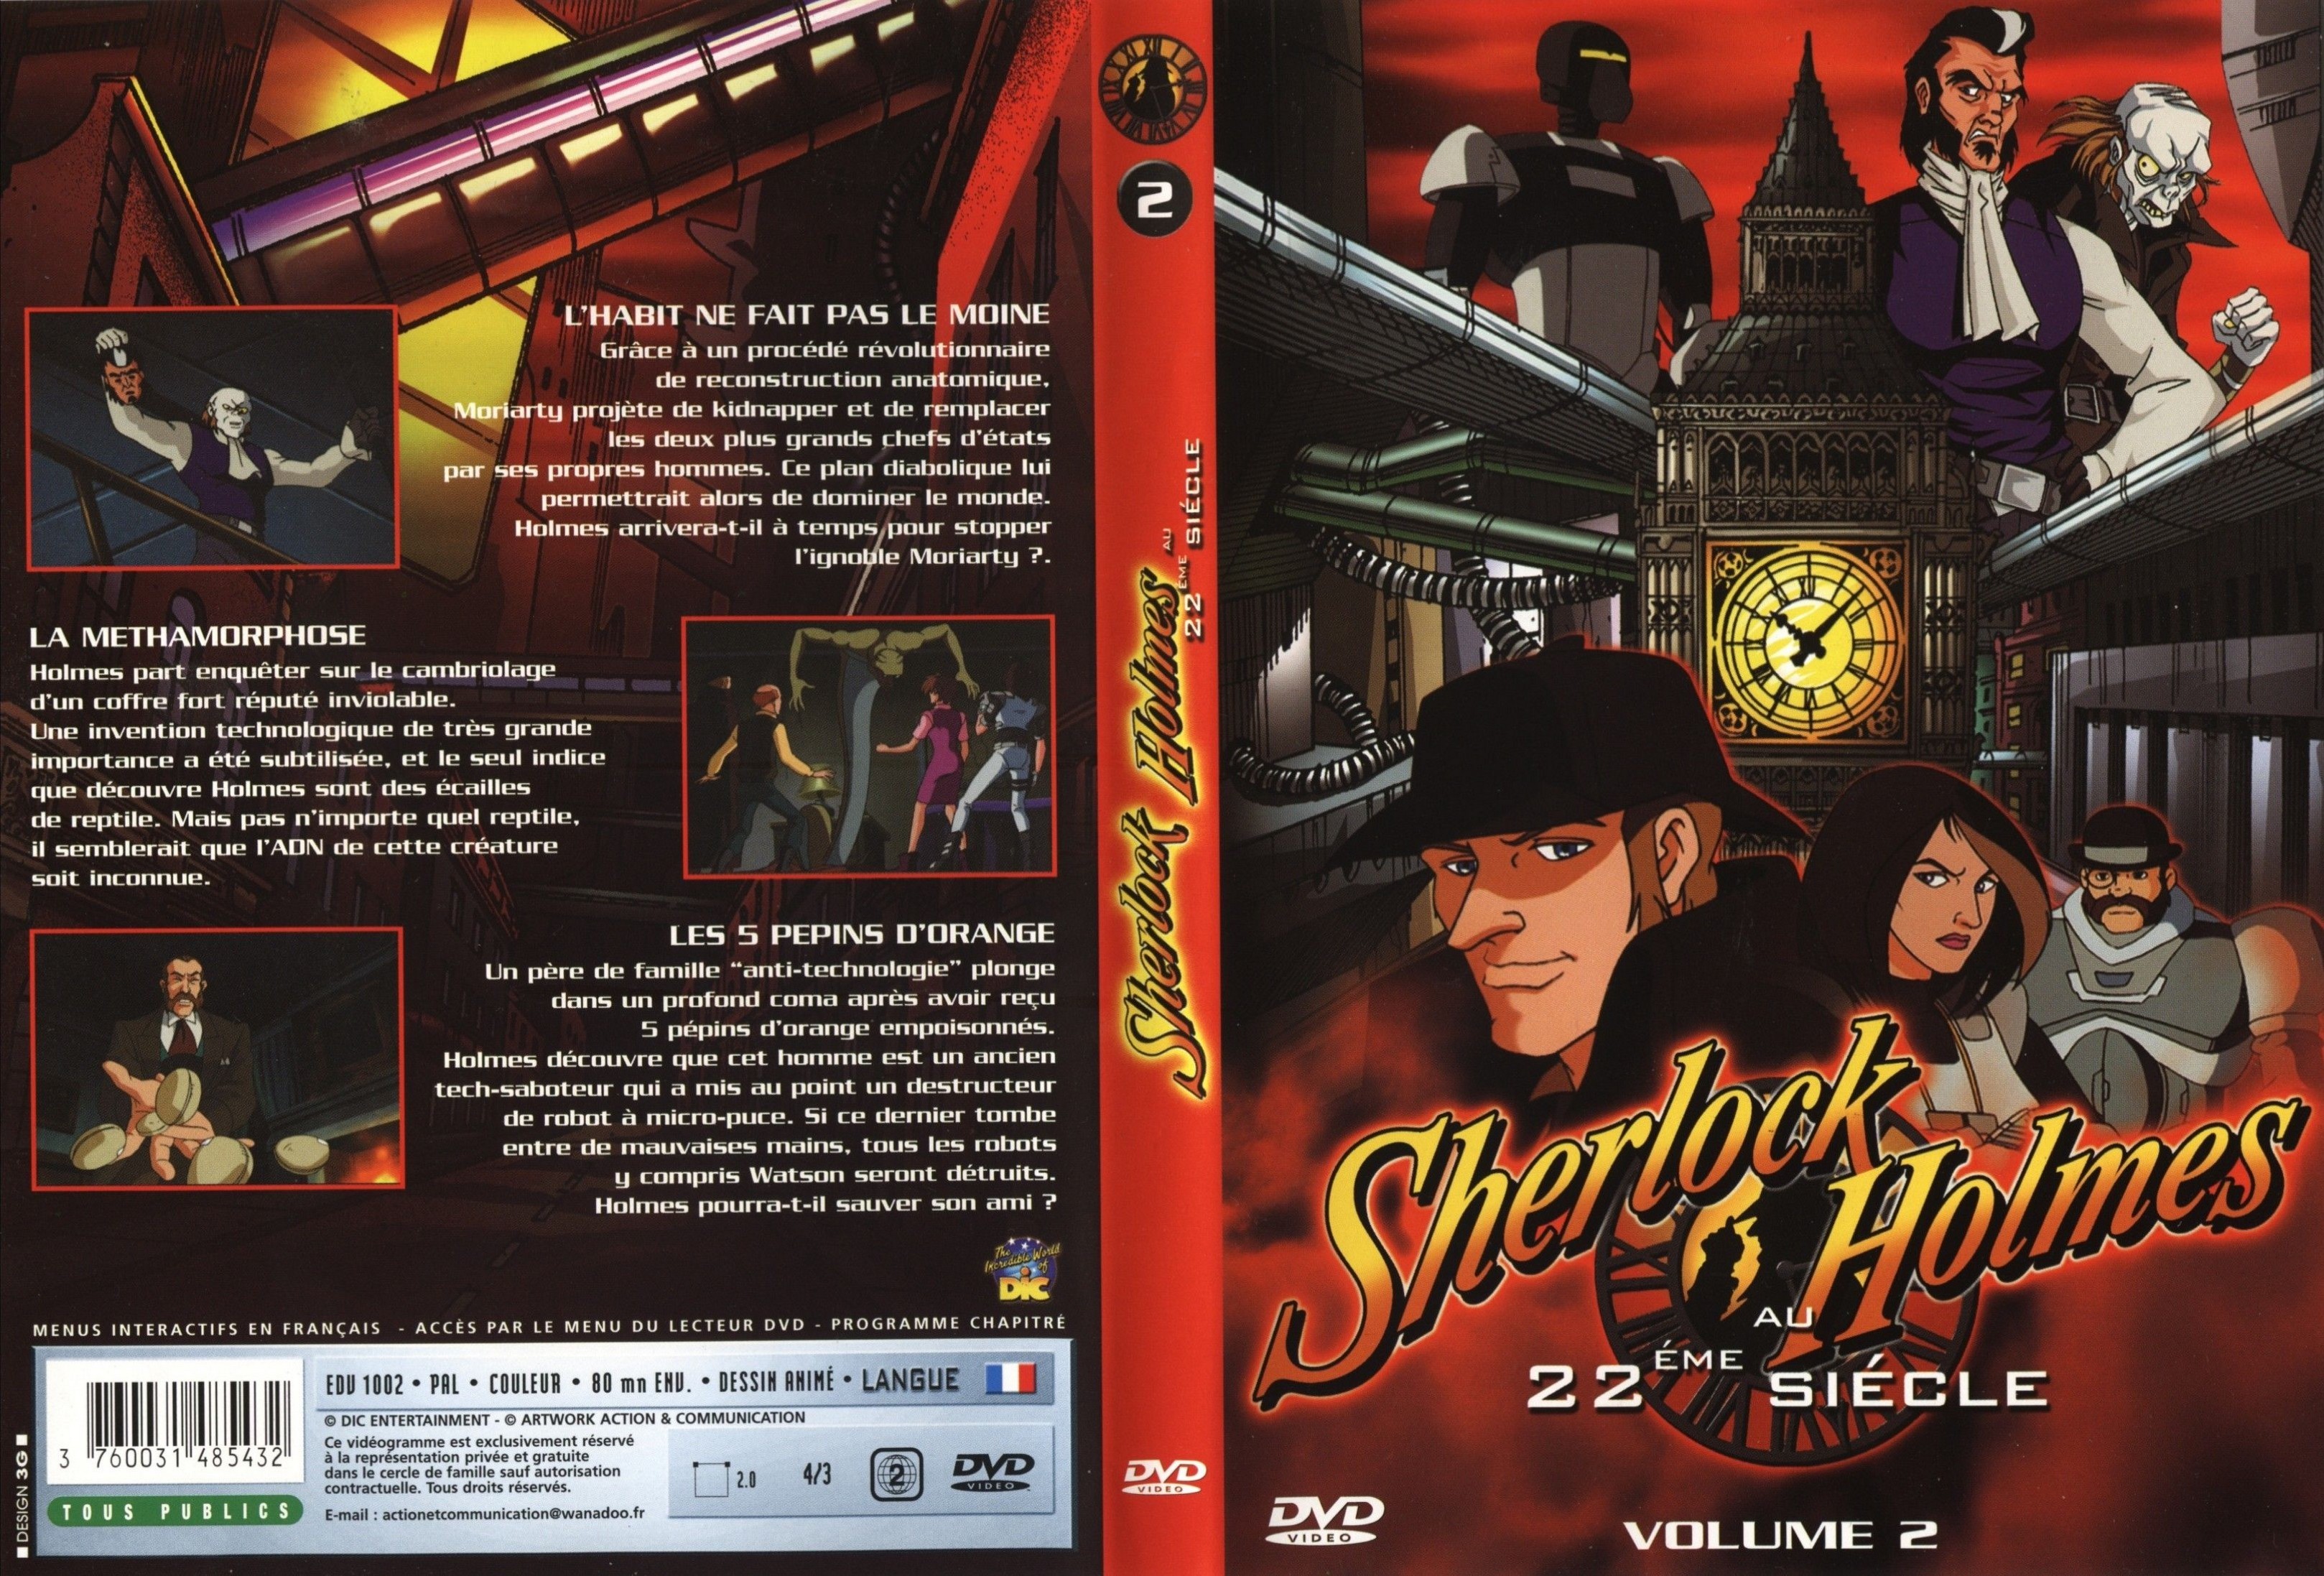 Jaquette DVD Sherlock Holmes au 22 me sicle vol 2